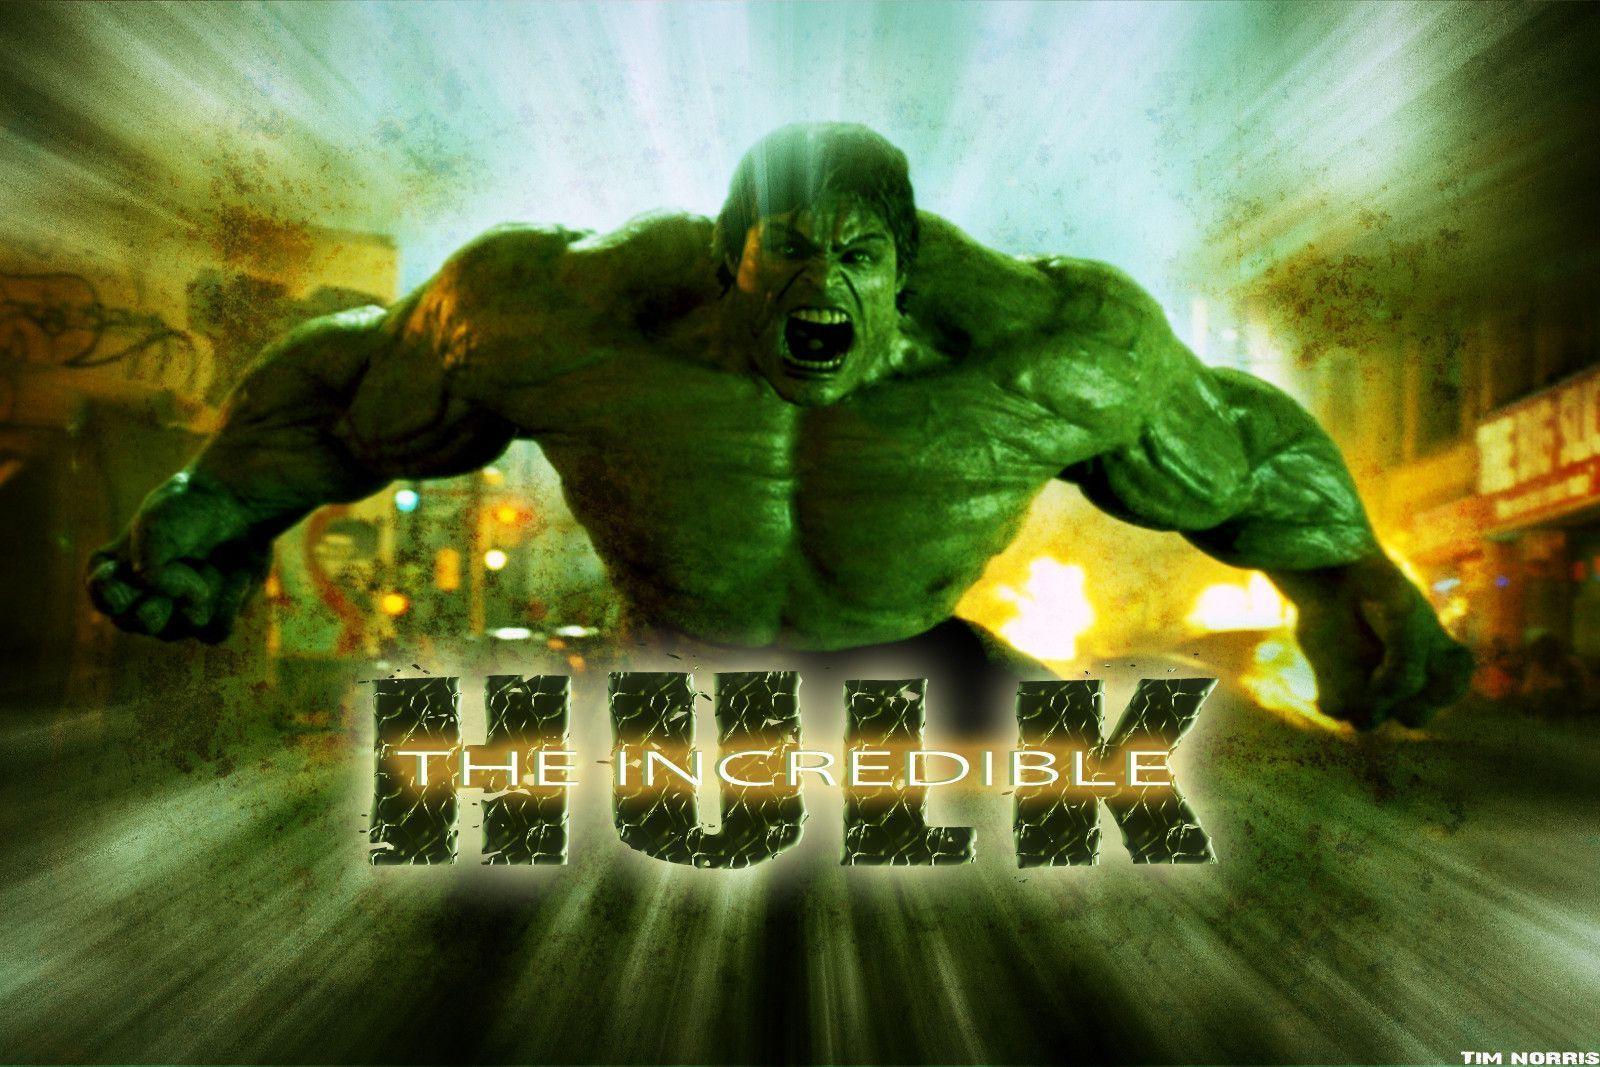 Hulk Wallpaper 2015